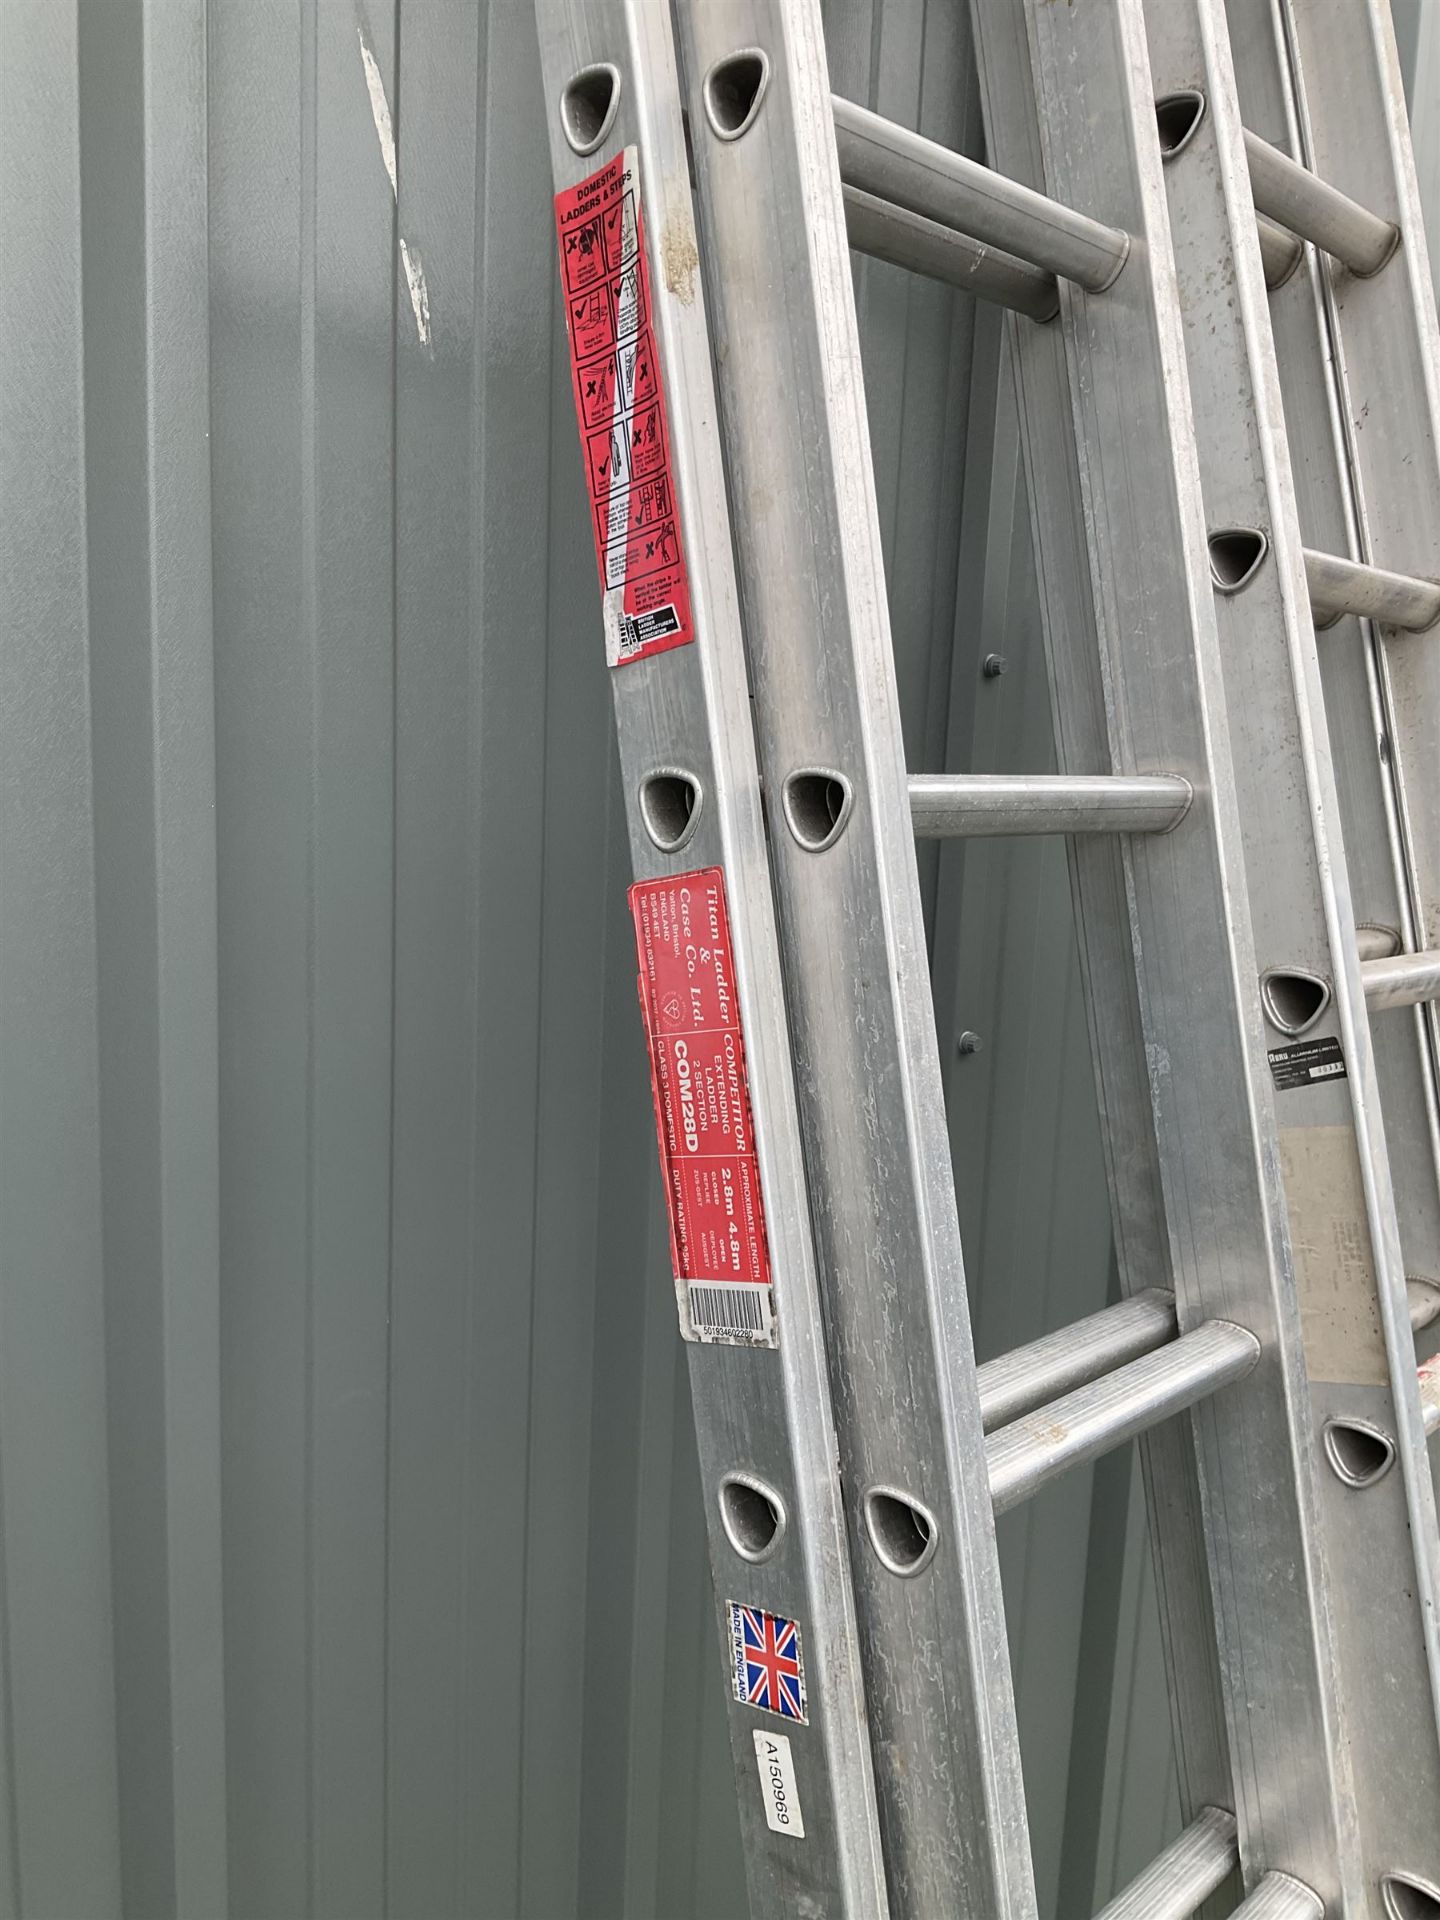 Pair of aluminium extending ladders - Image 3 of 3